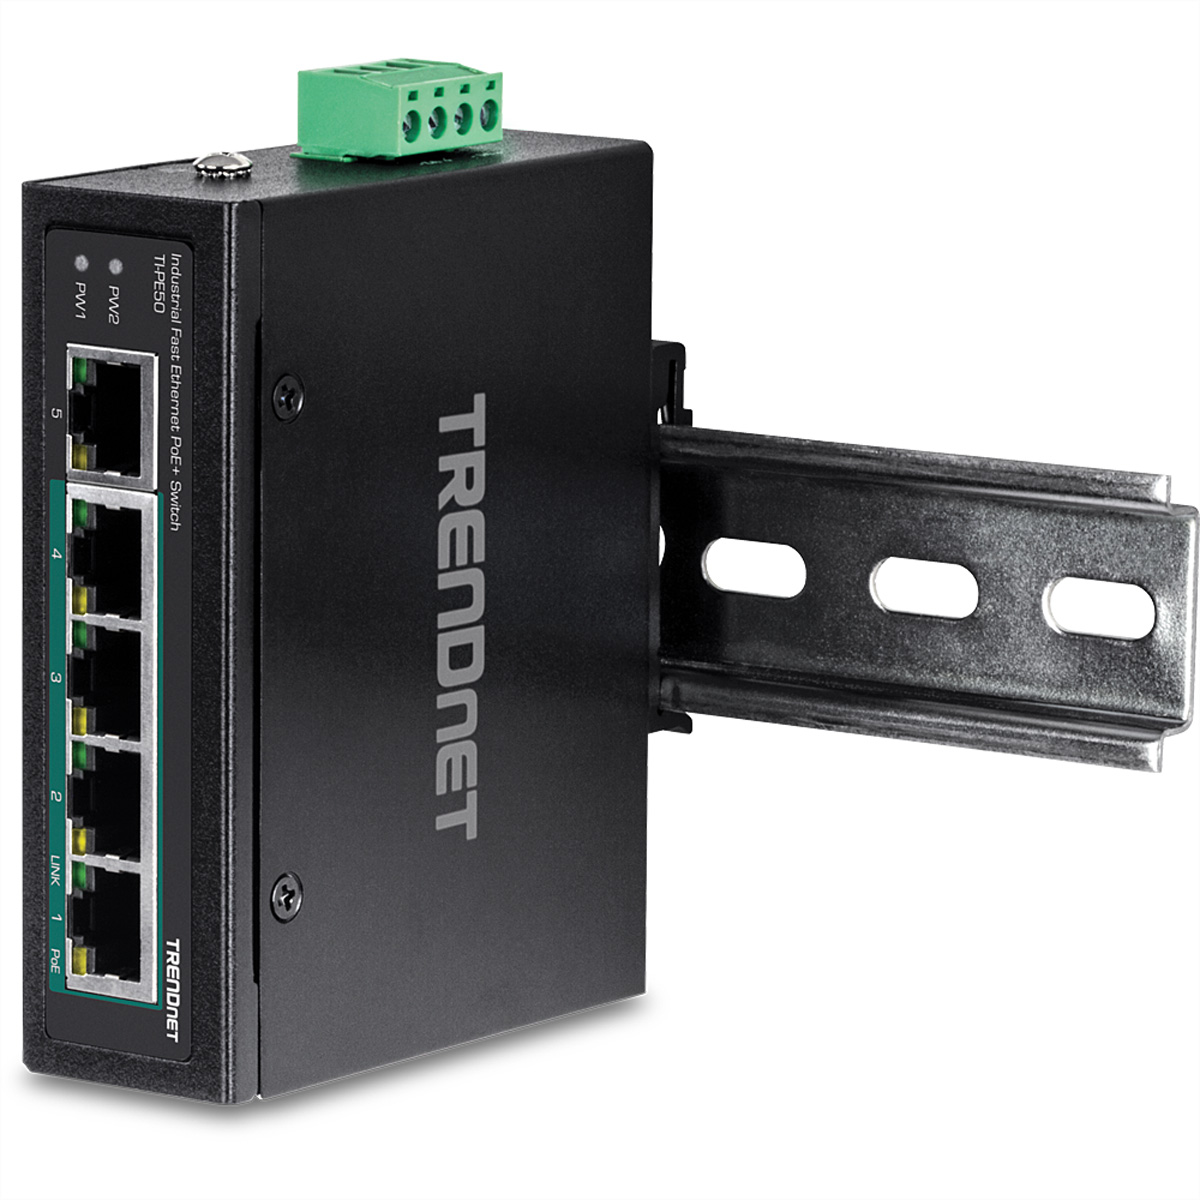 TRENDNET TI-PE50 PoE+ Industrial PoE Ethernet DIN-Rail Switch 5-Port Fast Gigabit Switch